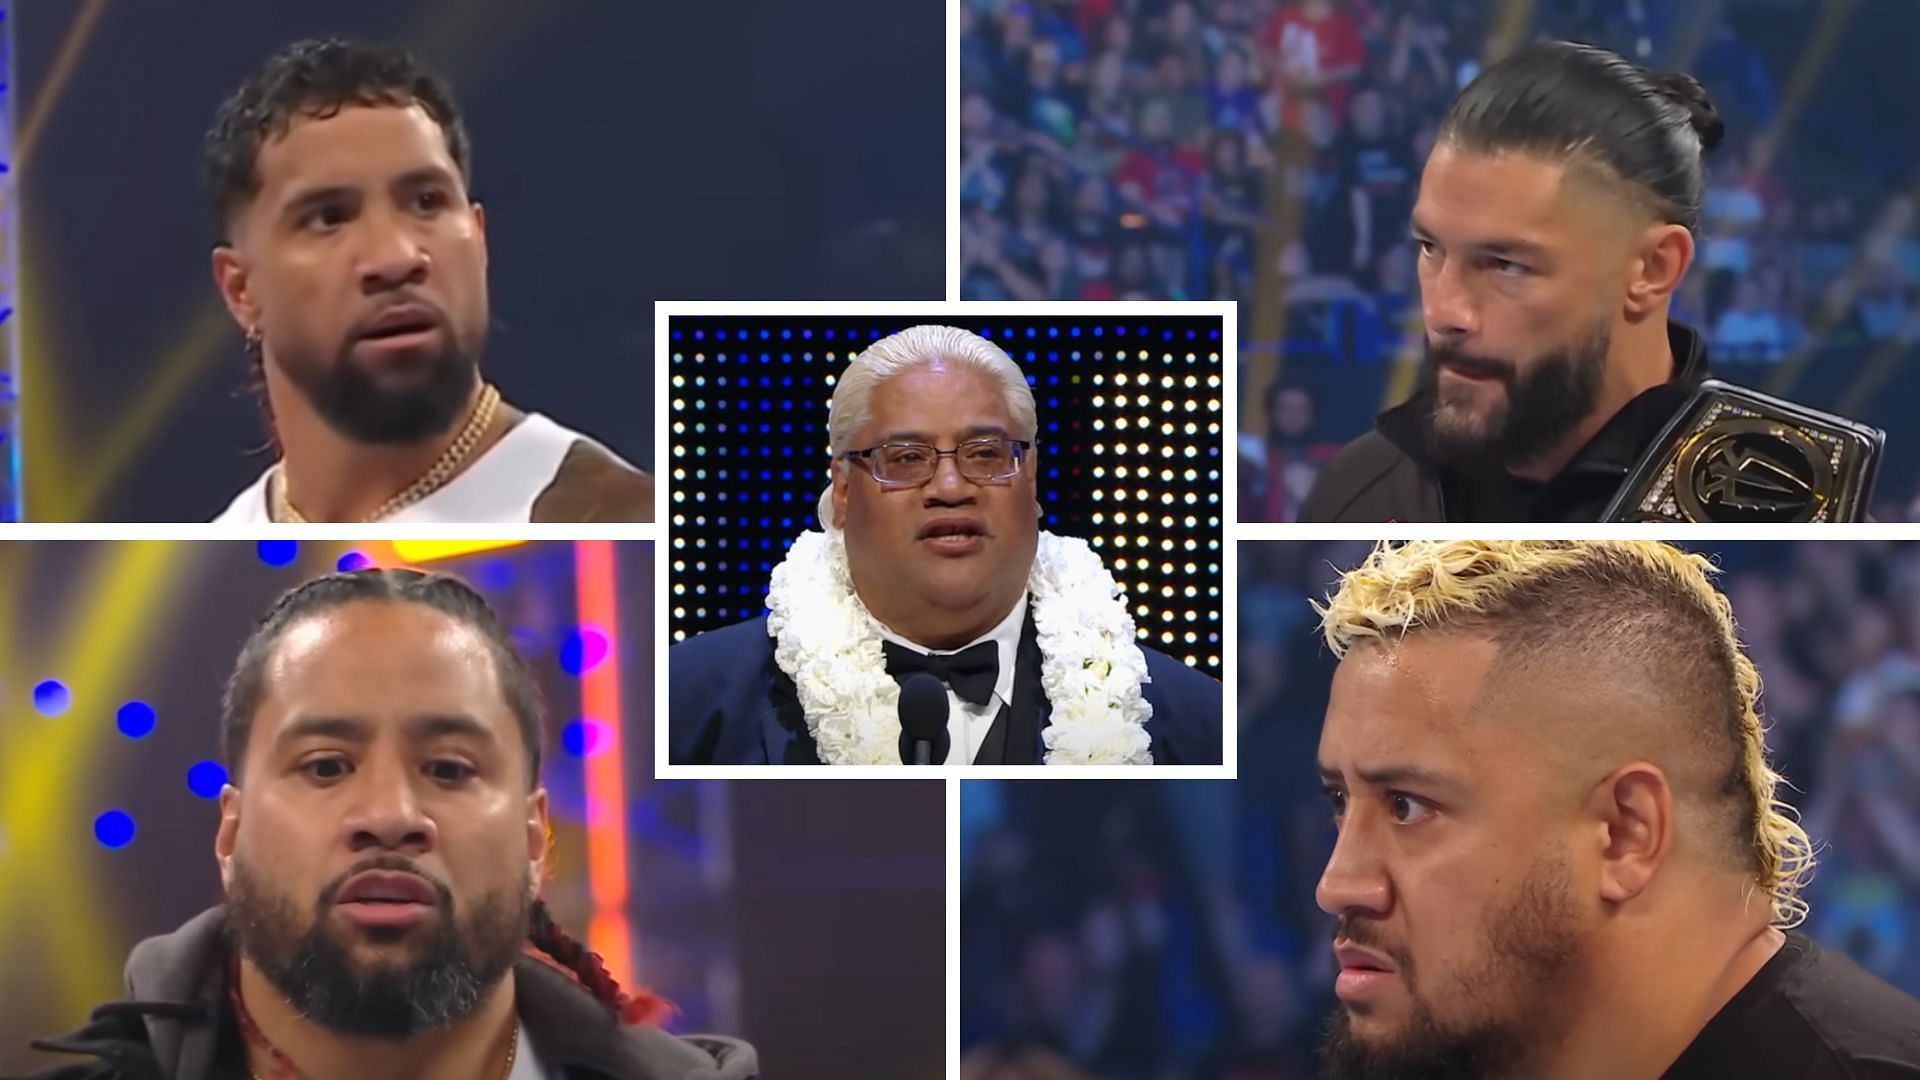 Rikishi (center) is a WWE legend